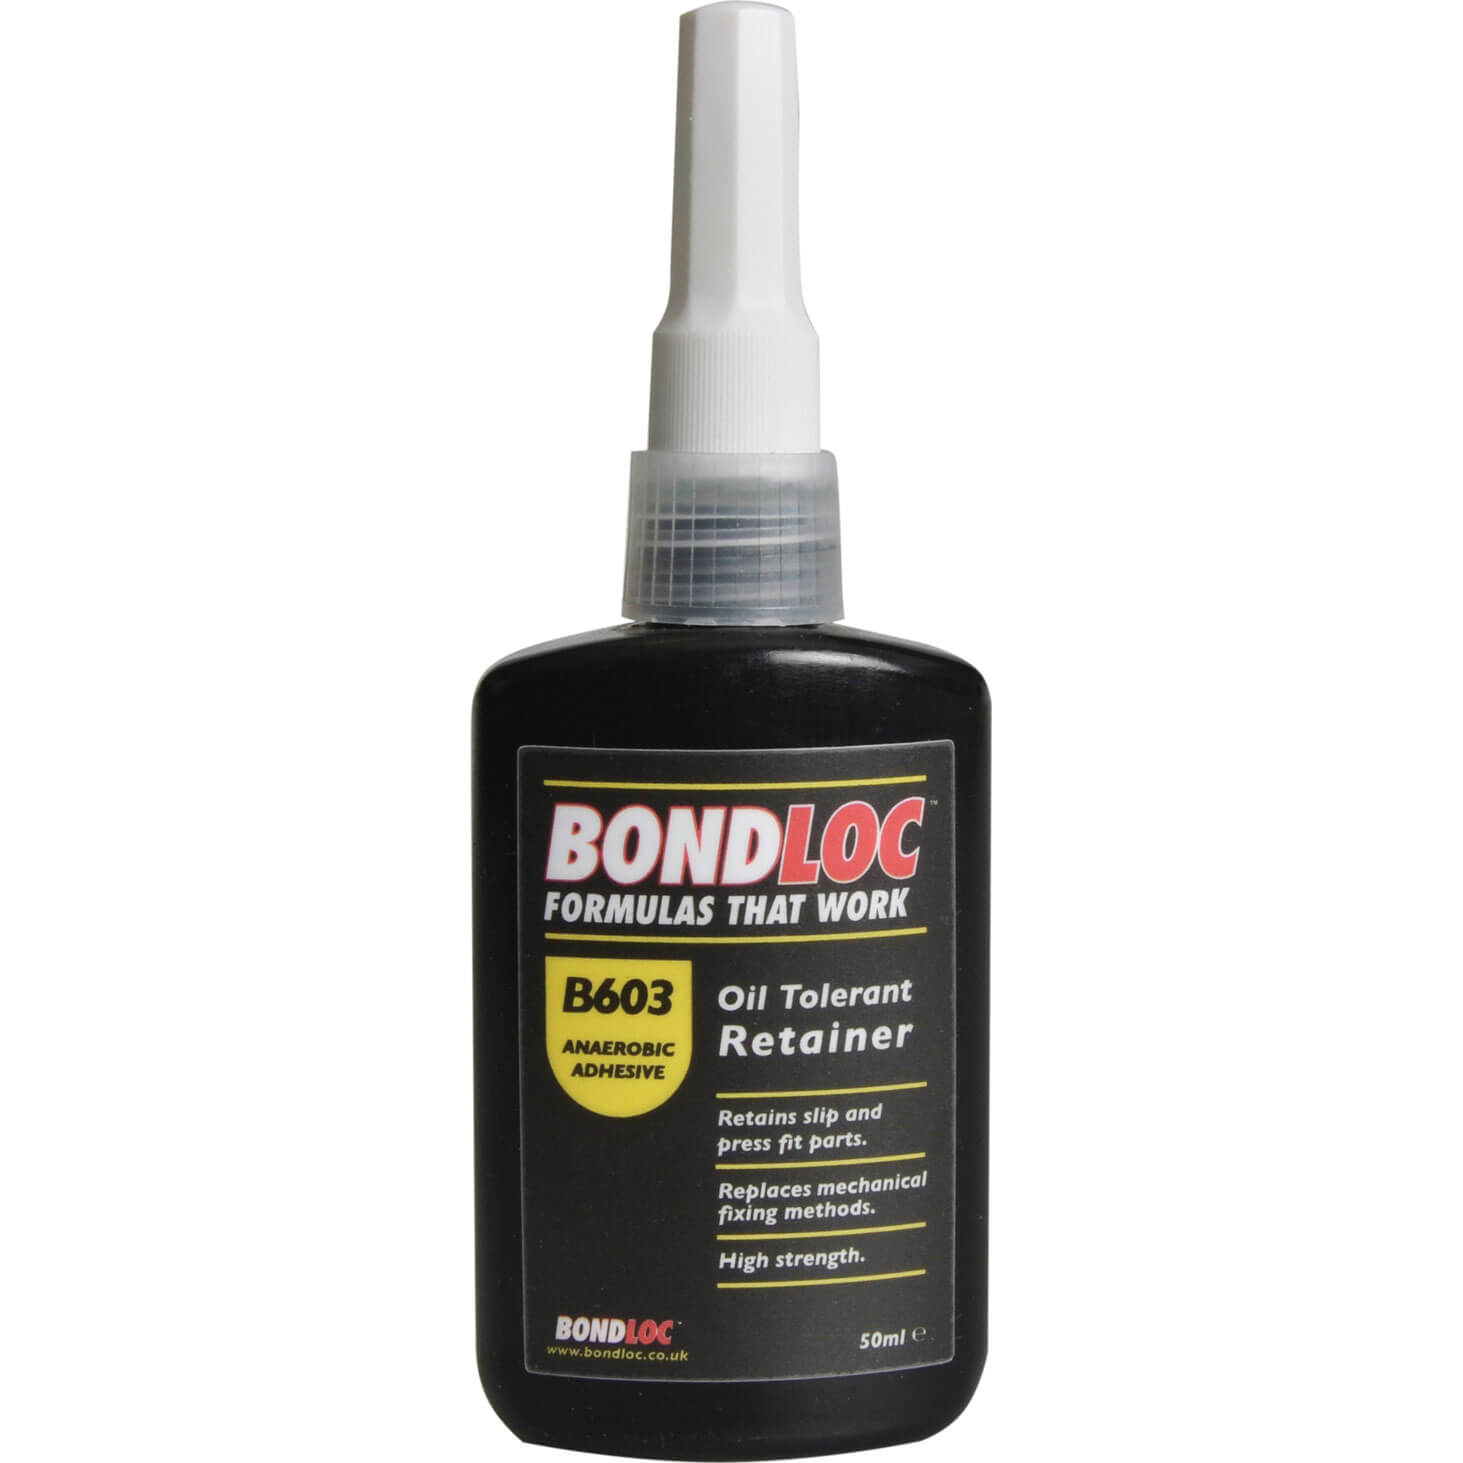 Photos - Sealant / Adhesive Bondloc B603 Oil Tolerant Retainer Compound 50ml B603-50